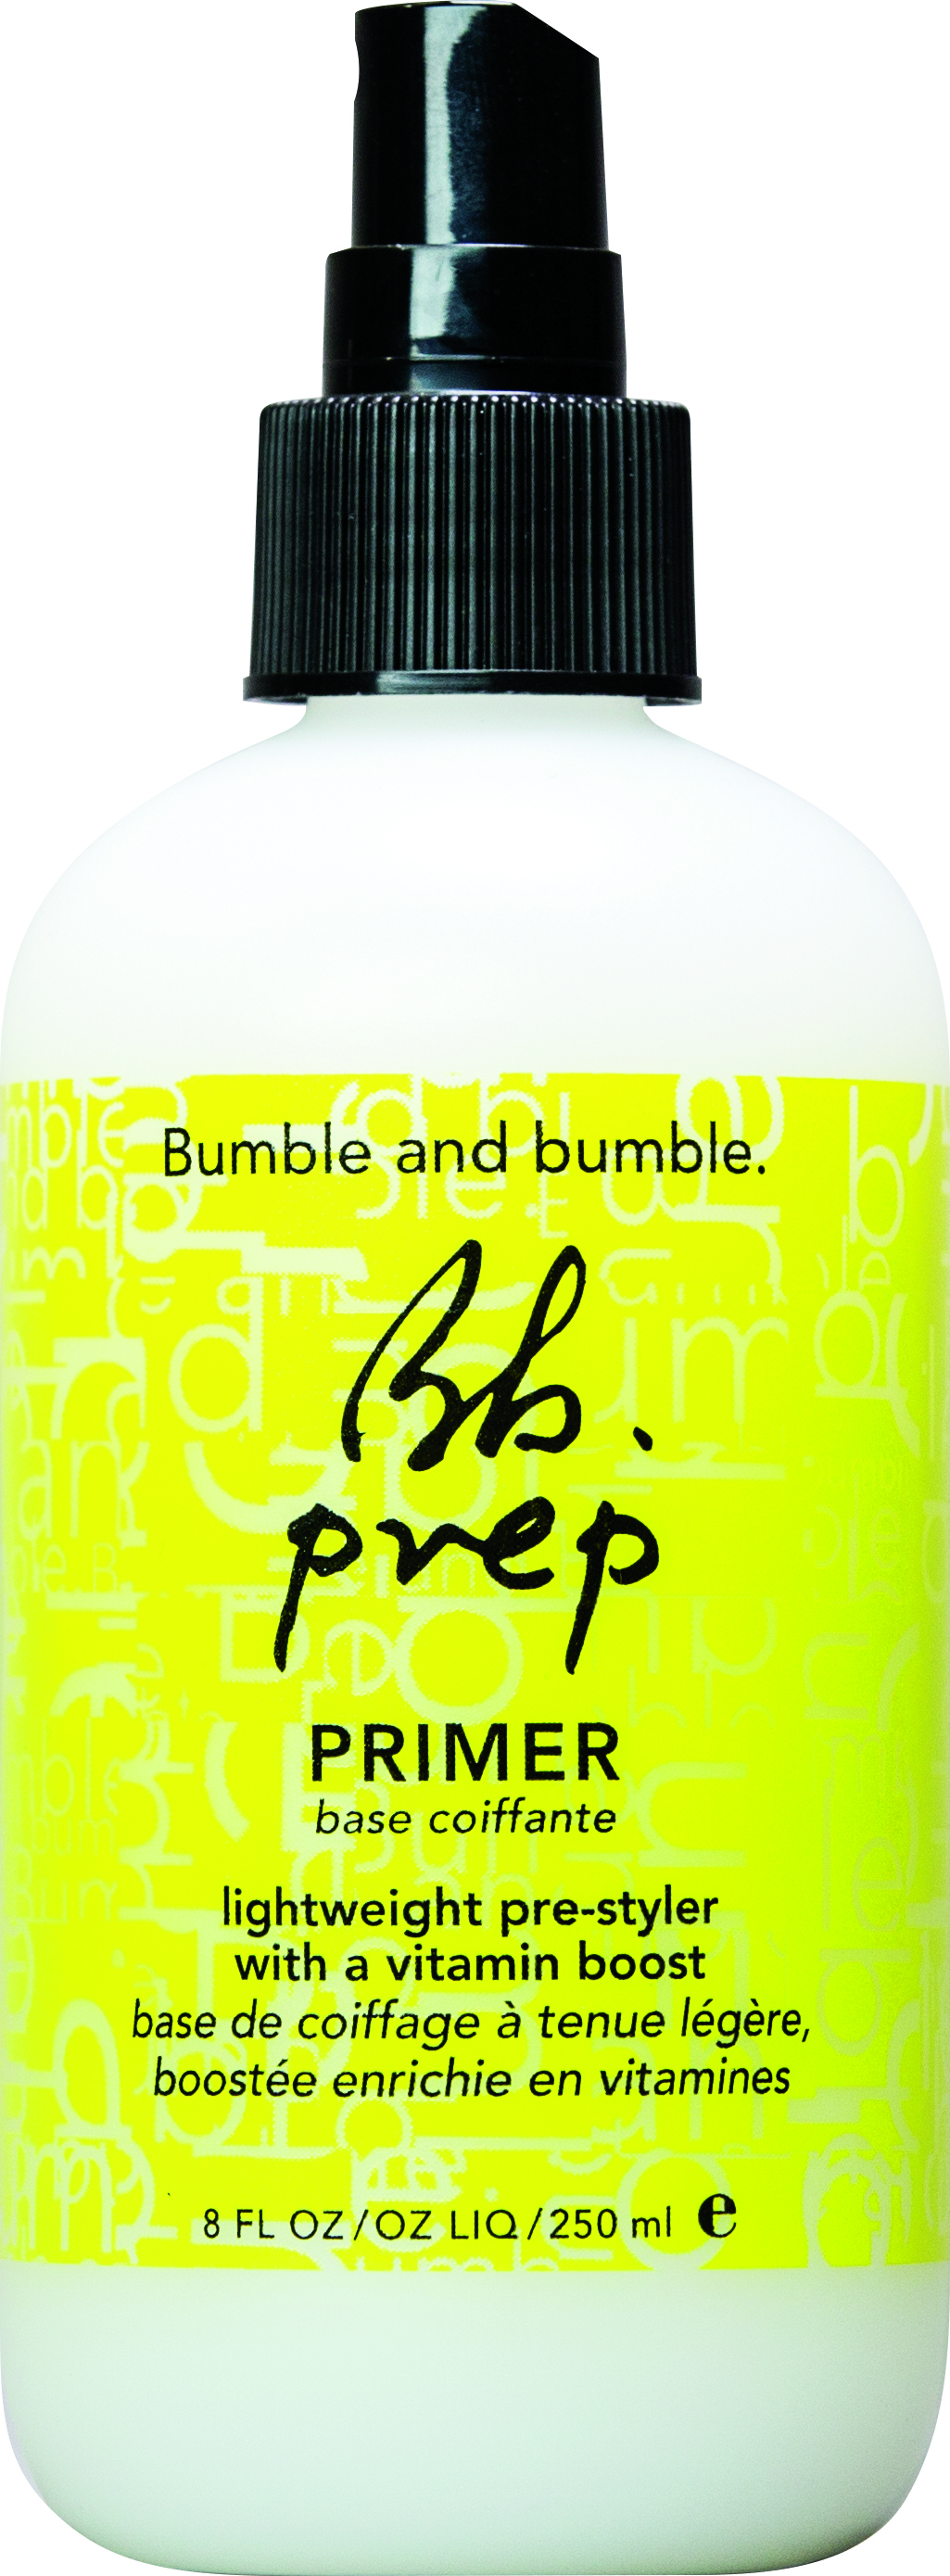 Bumble and bumble Prep Primer 250ml